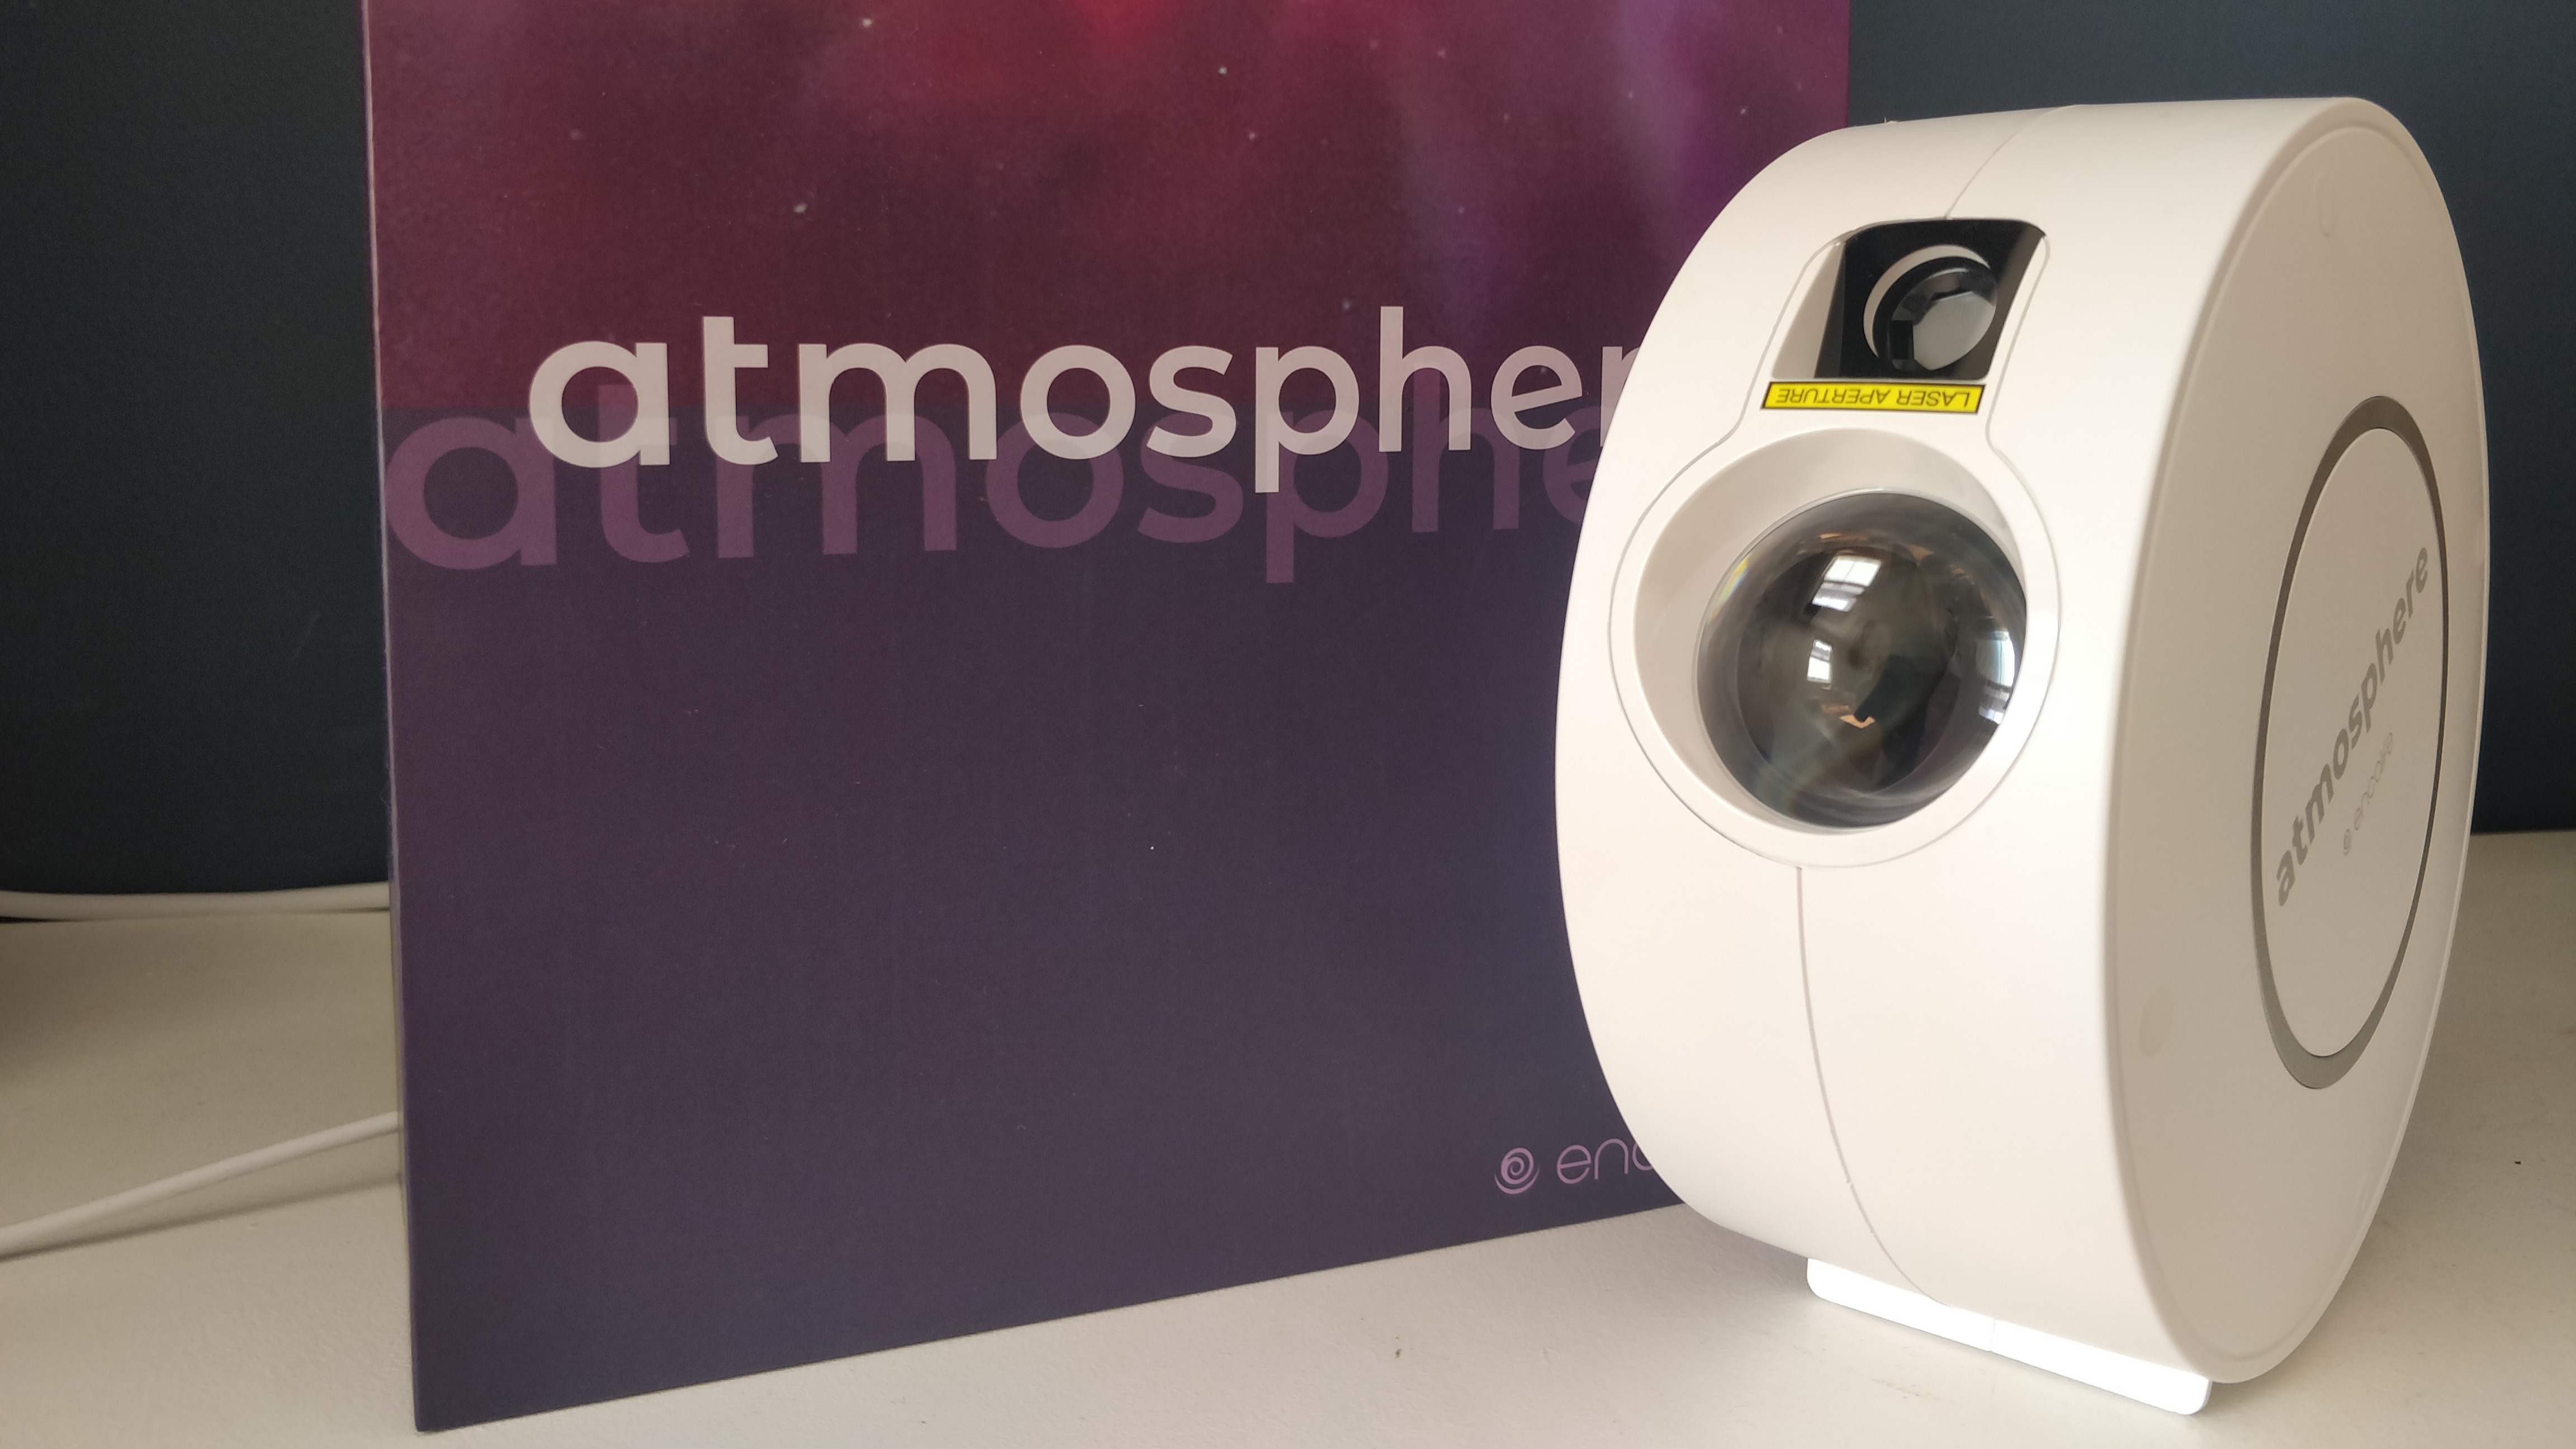 Encalife Atmosphere star projector set against its packaging